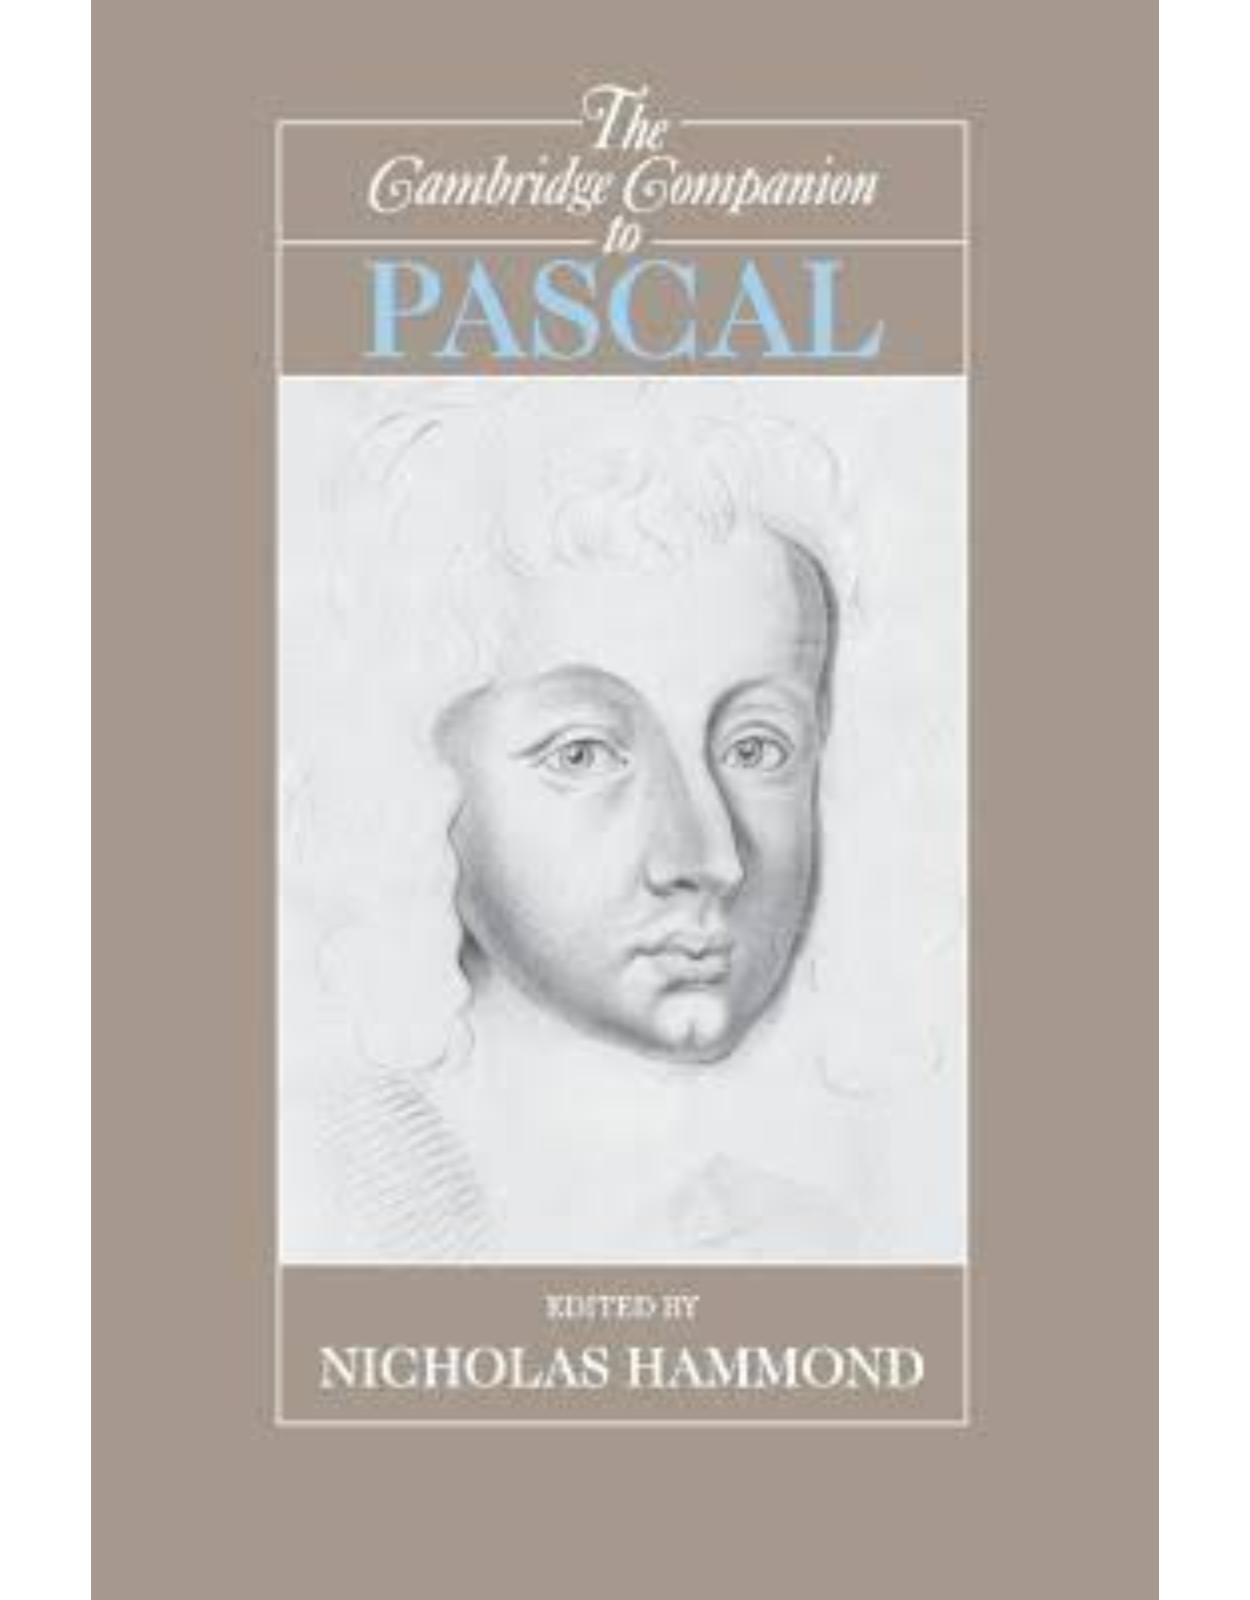 The Cambridge Companion to Pascal (Cambridge Companions to Philosophy)